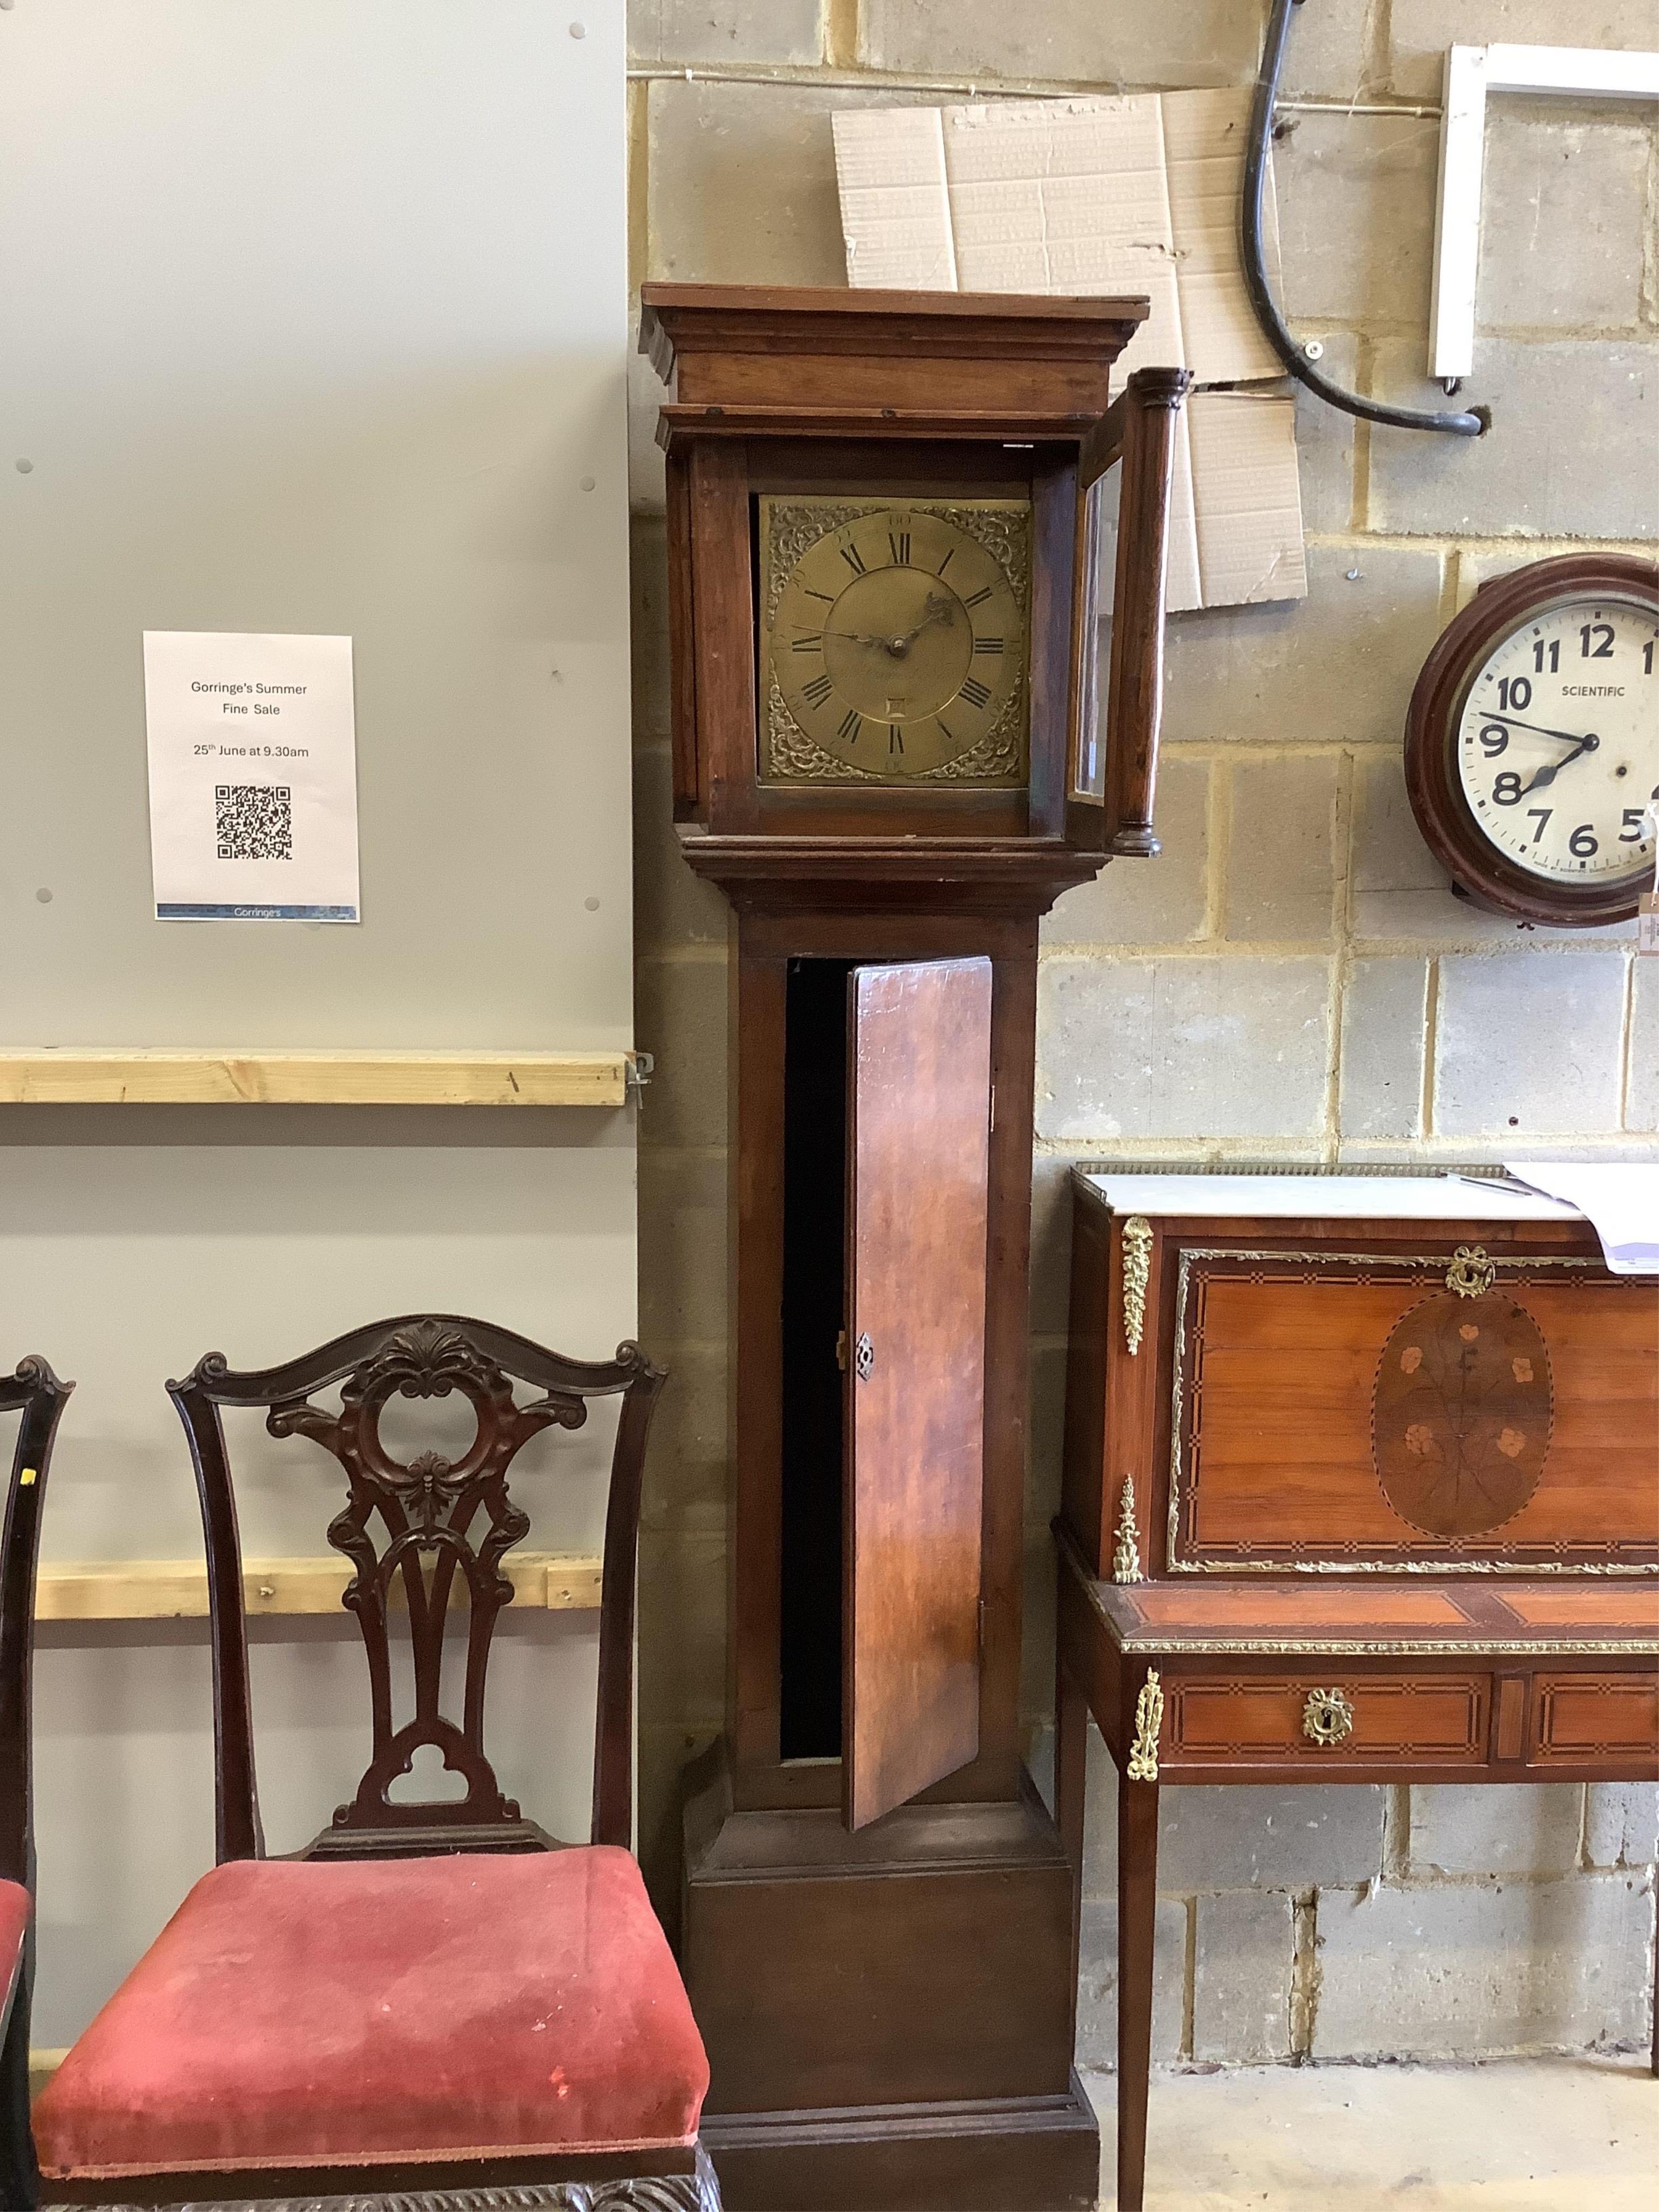 An early 19th century oak thirty hour longcase clock marked Joseph Eayre, St Neot’s, height 199cm. Condition - fair